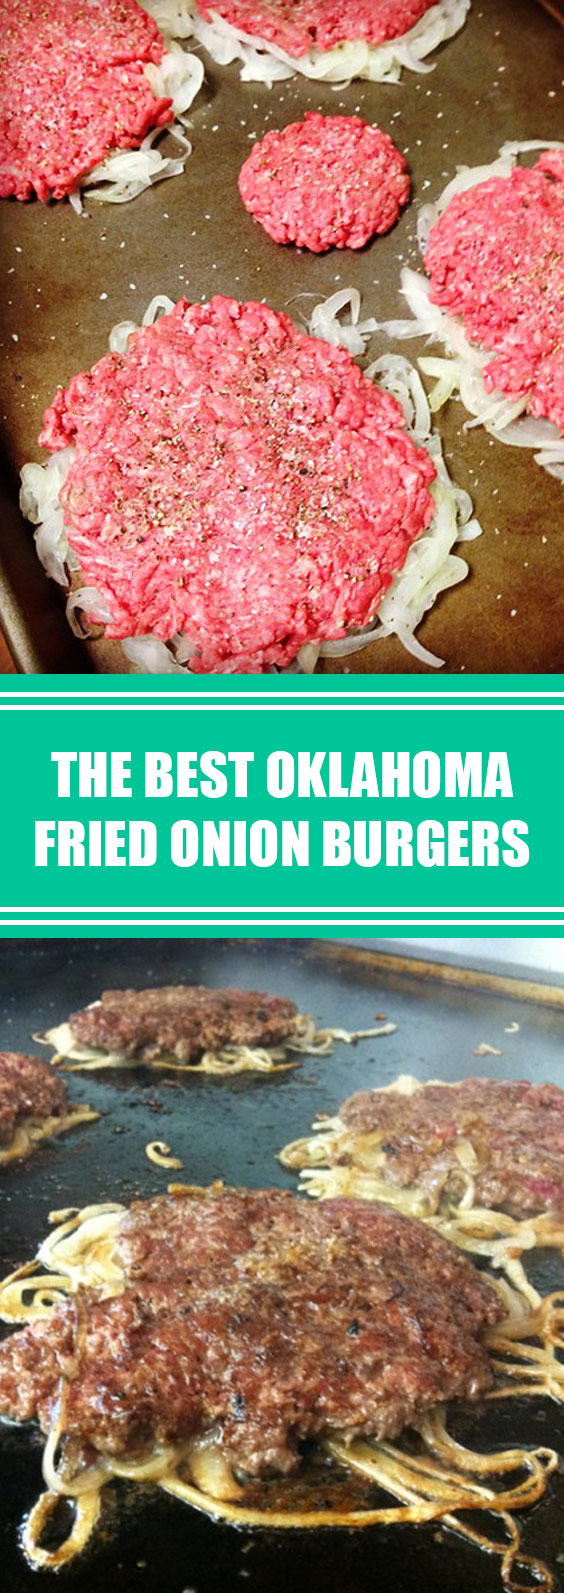 The Best Oklahoma Fried Onion Burgers #burgers #burgerrecipes